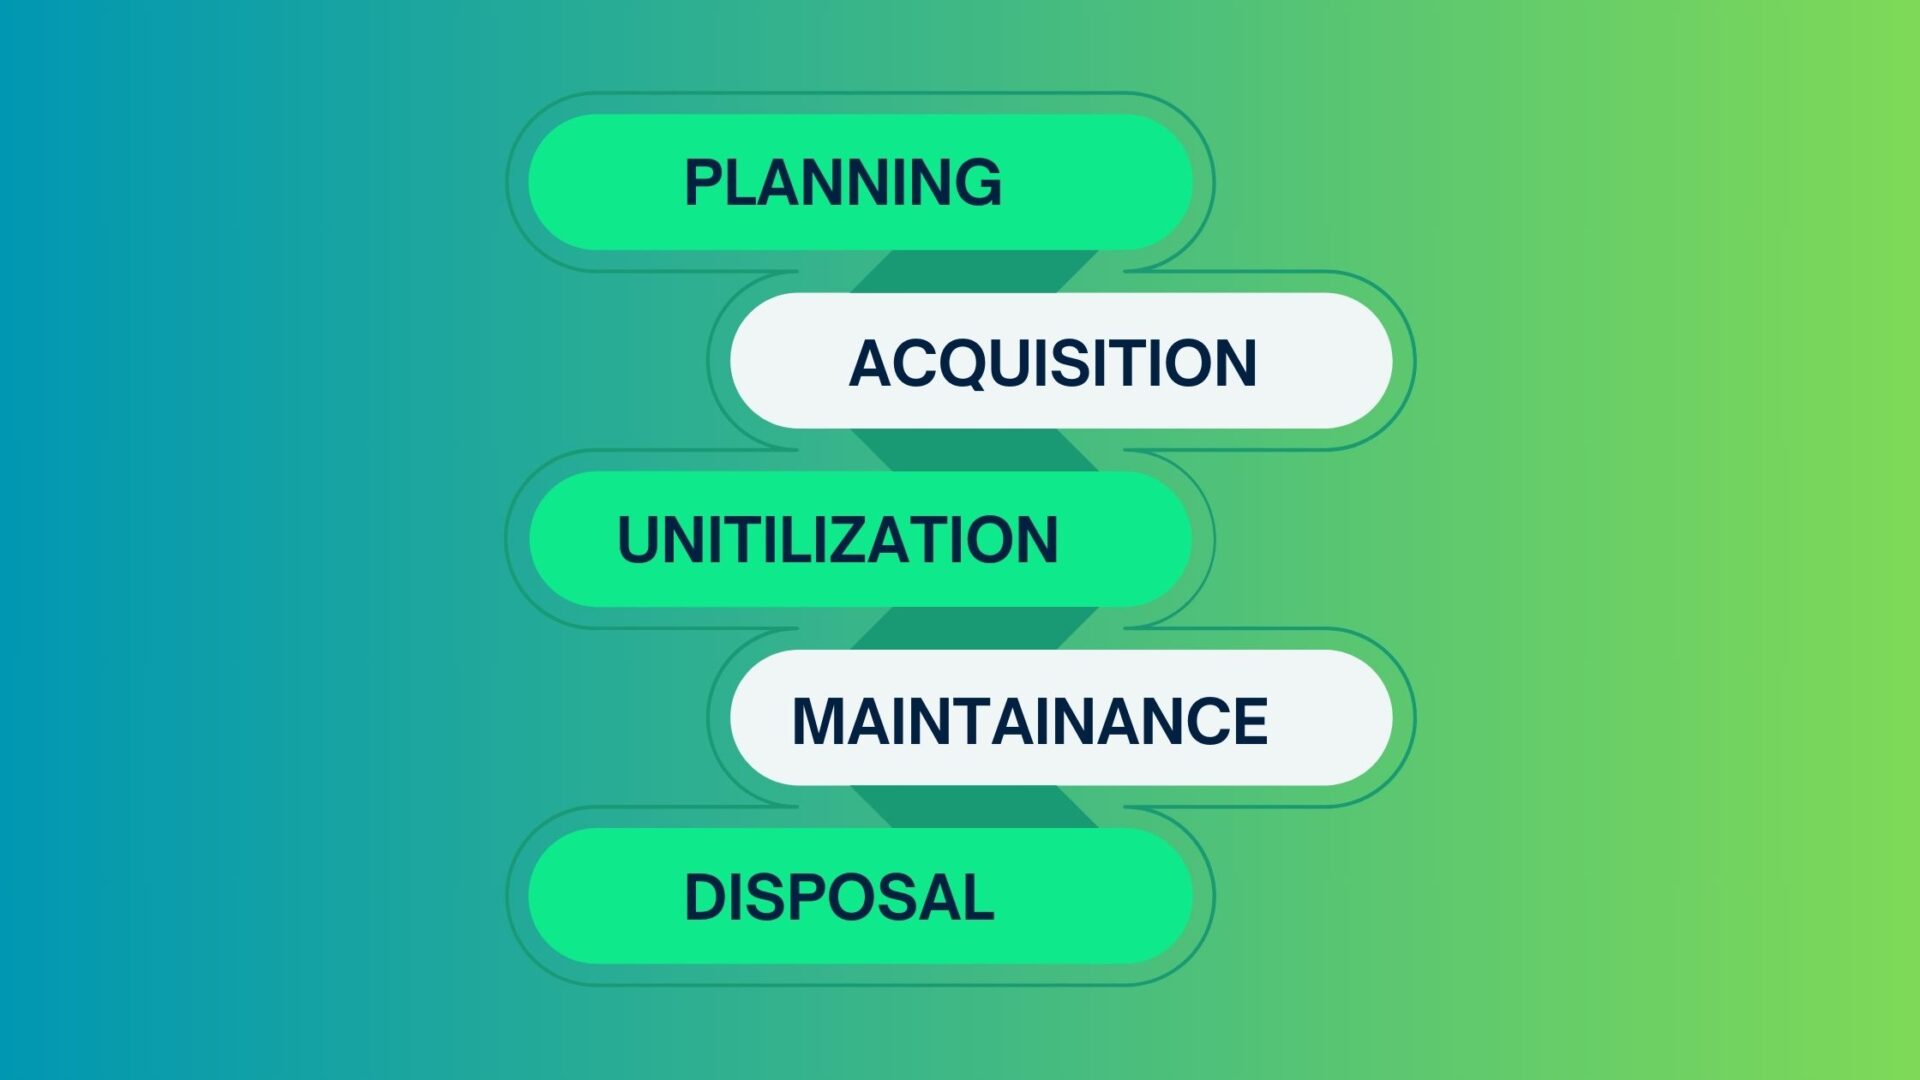 5 key stages of Atlassian asset management process